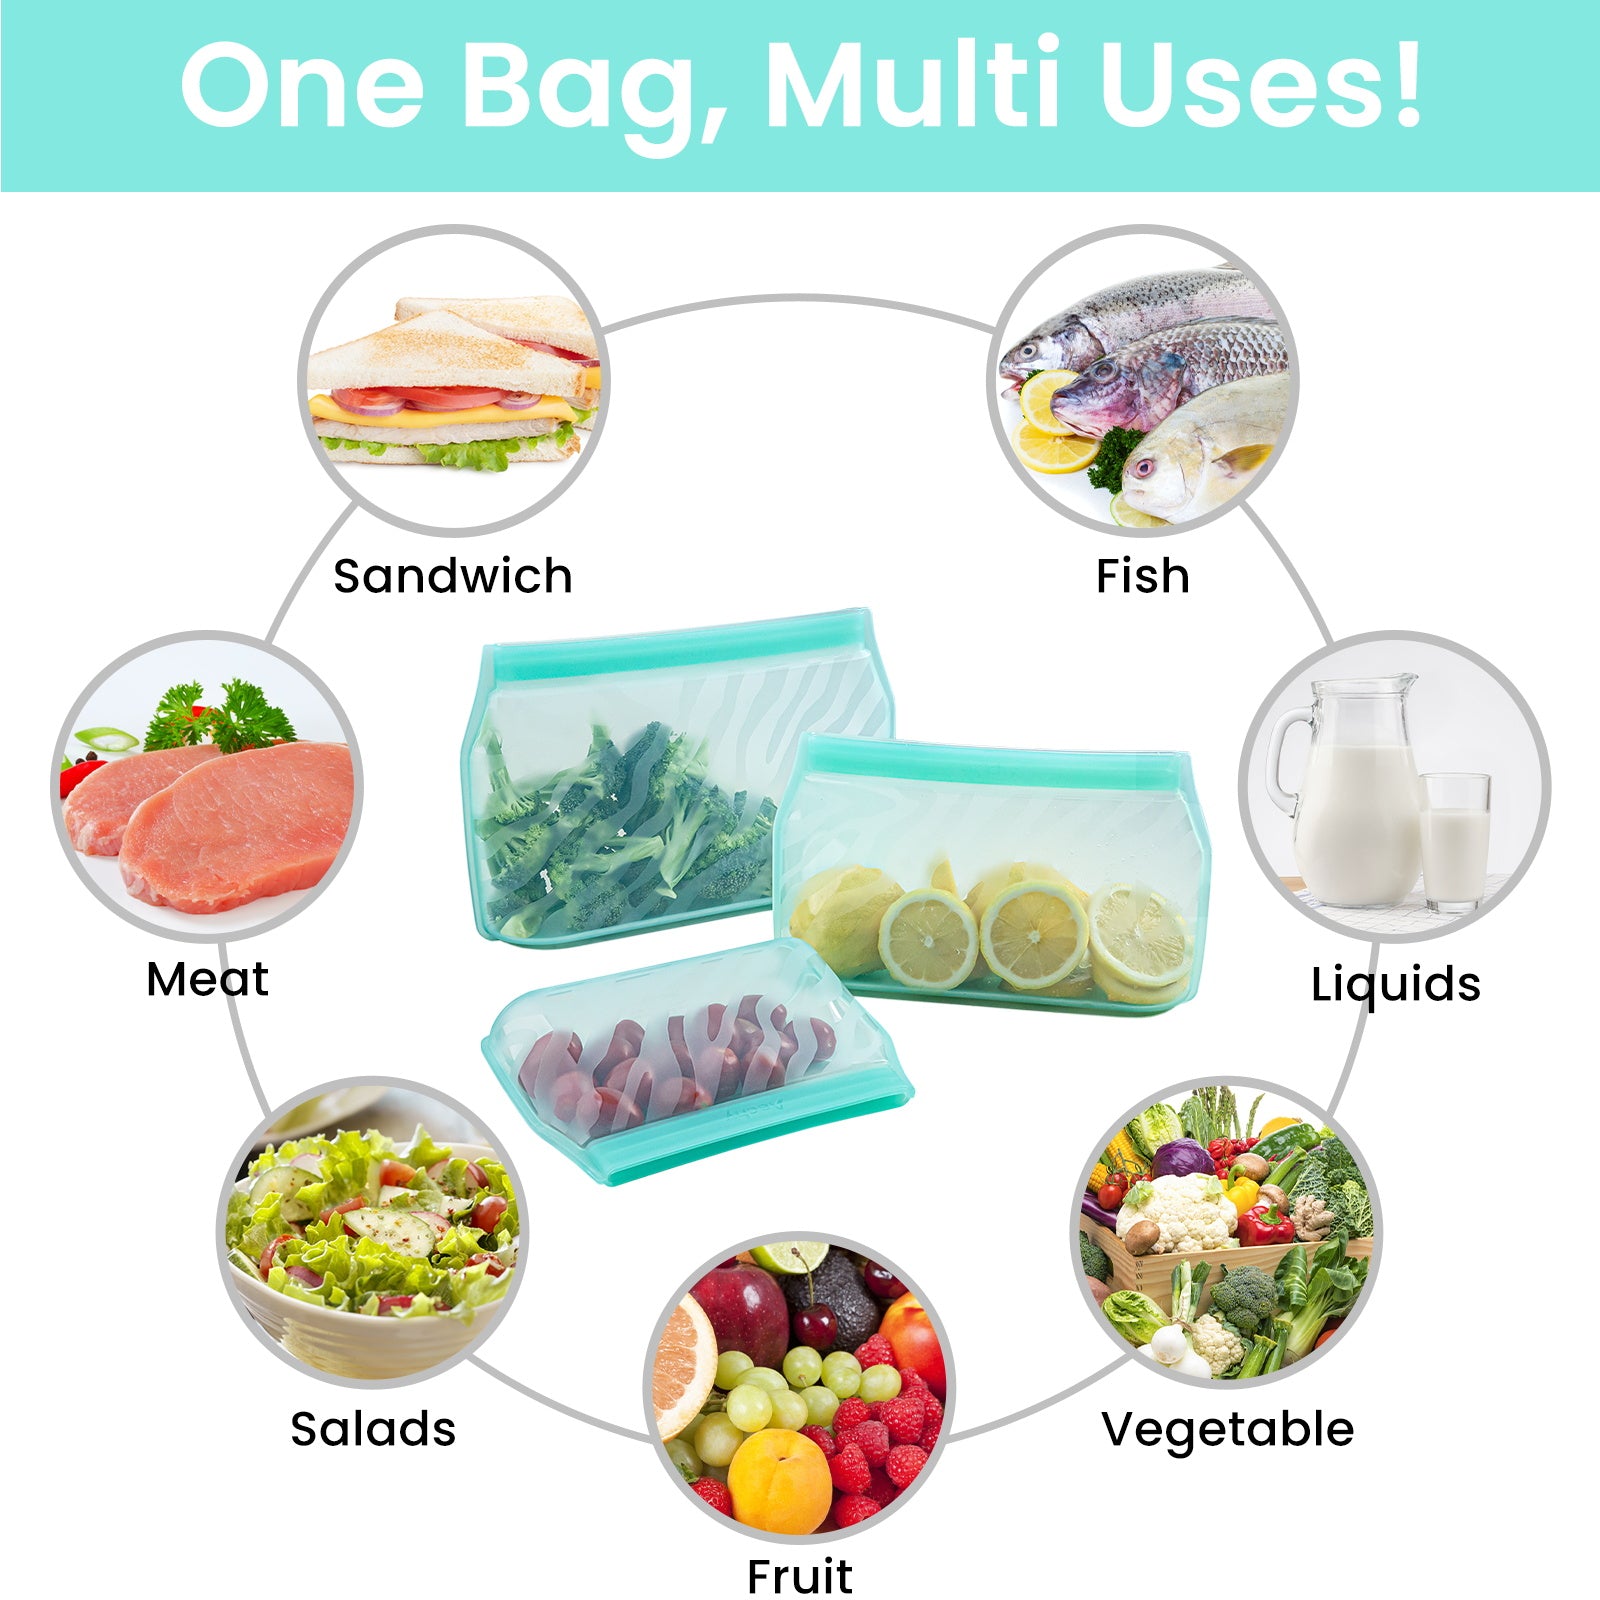 Platinum Silicone Food Grade Reusable Storage Bag White / M